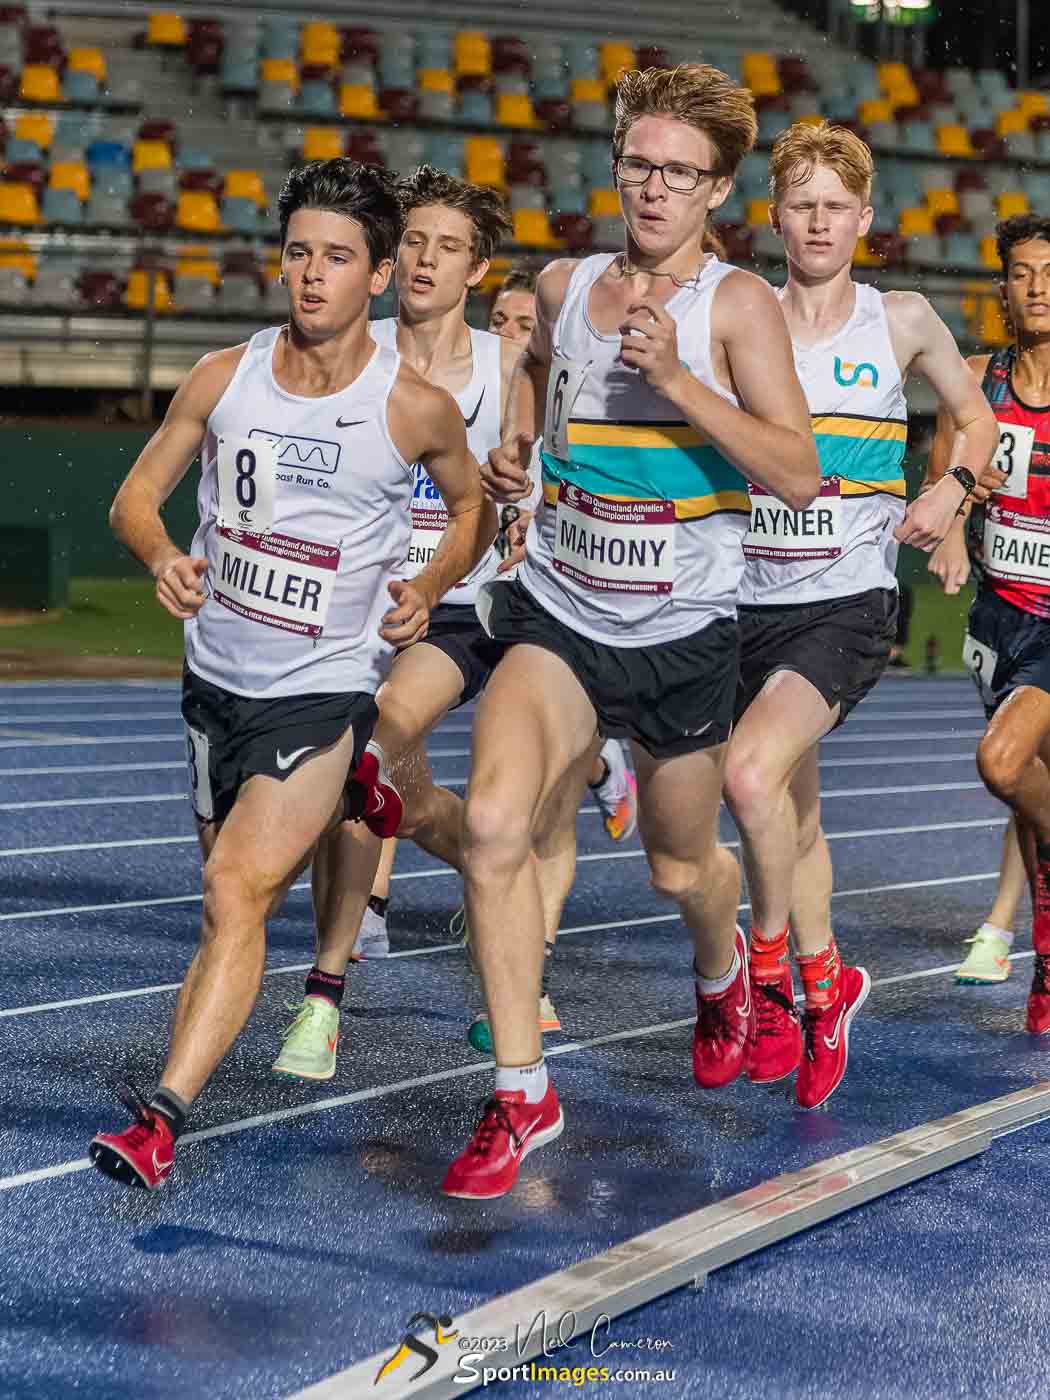 Charlie Miller, Seth Mahony, Lachlan Rayner, Final, Men Under 18 800m